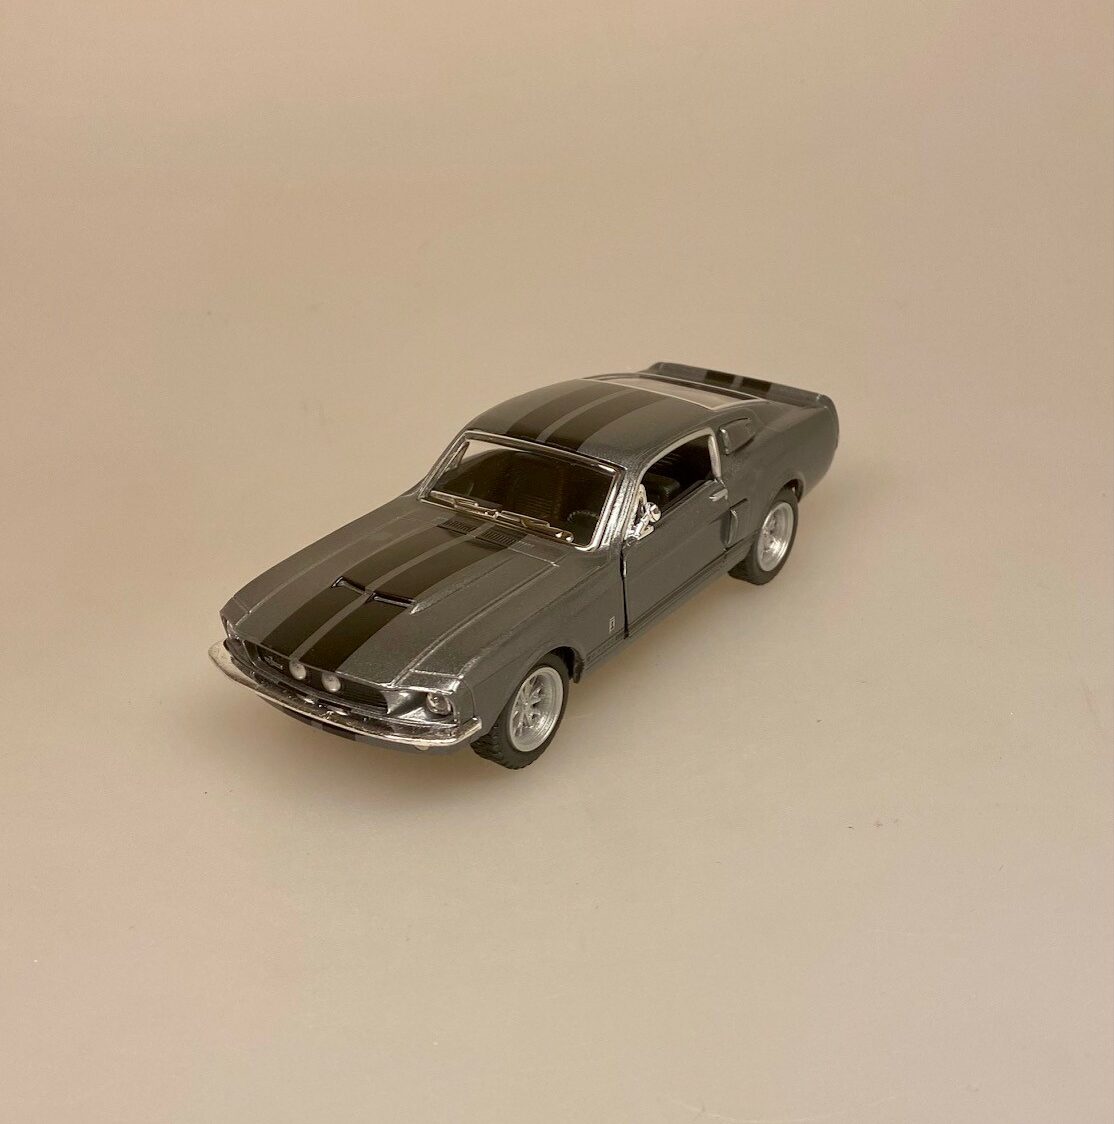 Modelbil Shelby GT 500 - Sølv, sølvgrå, metallic, 60 seconds gone, eleanor, nicolas cage, 1967, oldsmobile, old school, modelbiler, lille, ægte, racer, racerbil, strretracer, samler, kørekort, ny bil, gamle, biler, biti, ribe